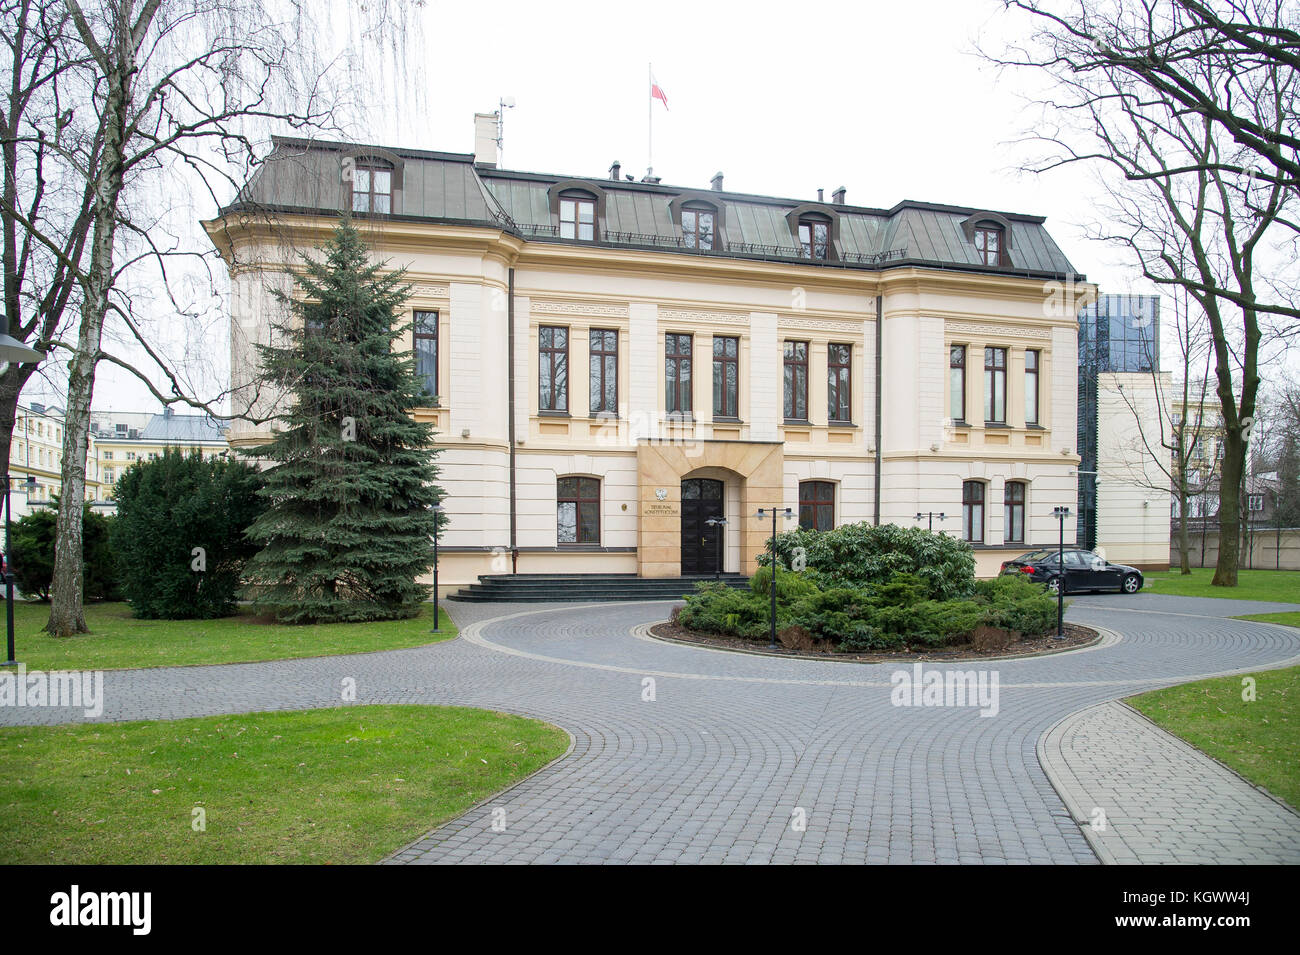 Der Sitz des Verfassungsgerichts (Trybunal Konstytucyjny) in Warschau, Polen. 22. März 2017 © wojciech Strozyk/Alamy Stock Foto Stockfoto